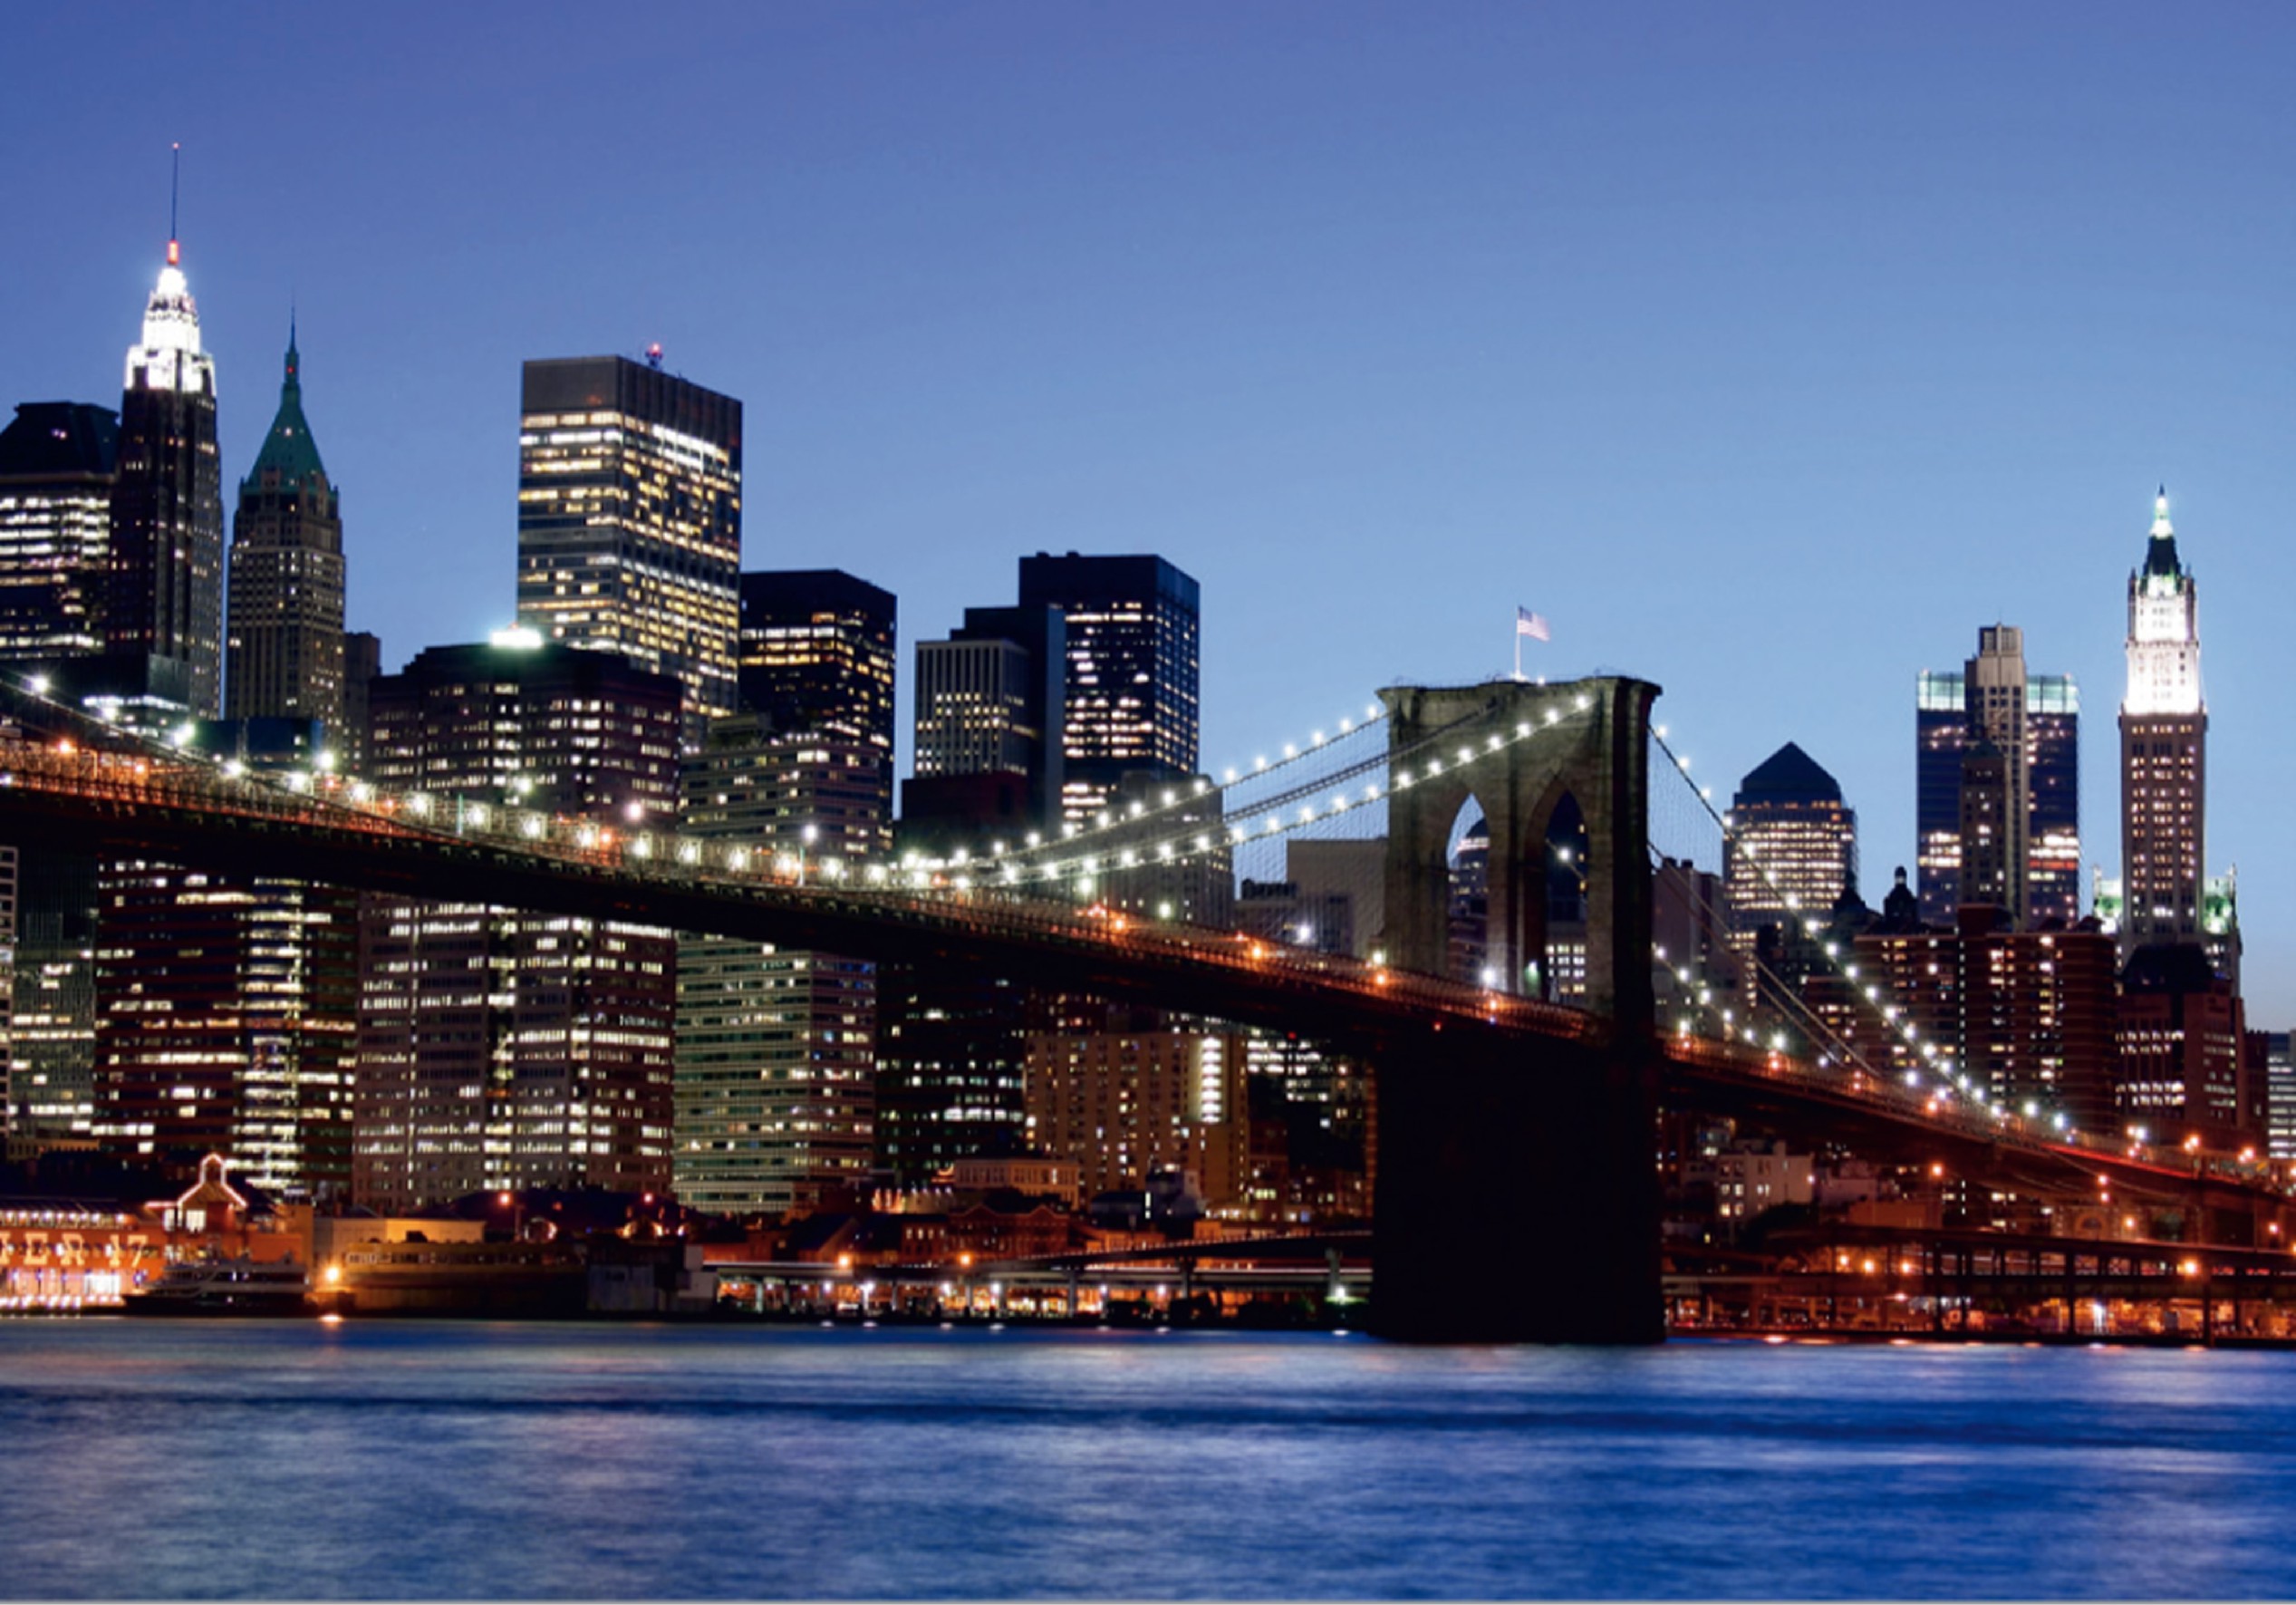 Fototapete Brooklyn Bridge New York kaufen | home24